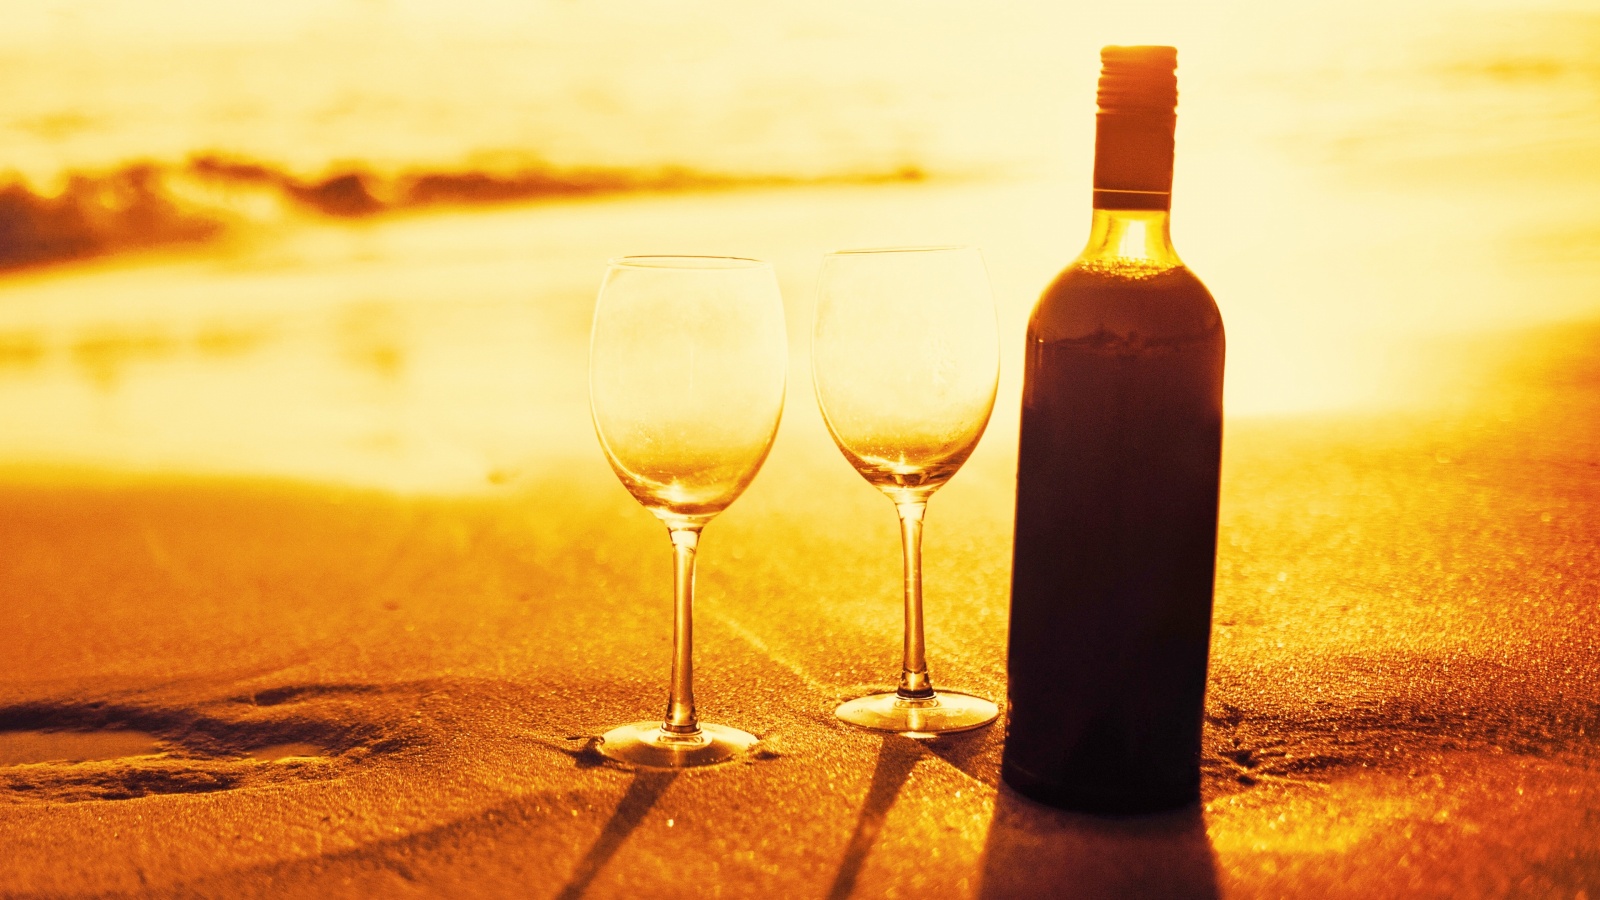 Romantic Evening Wine And Glasses